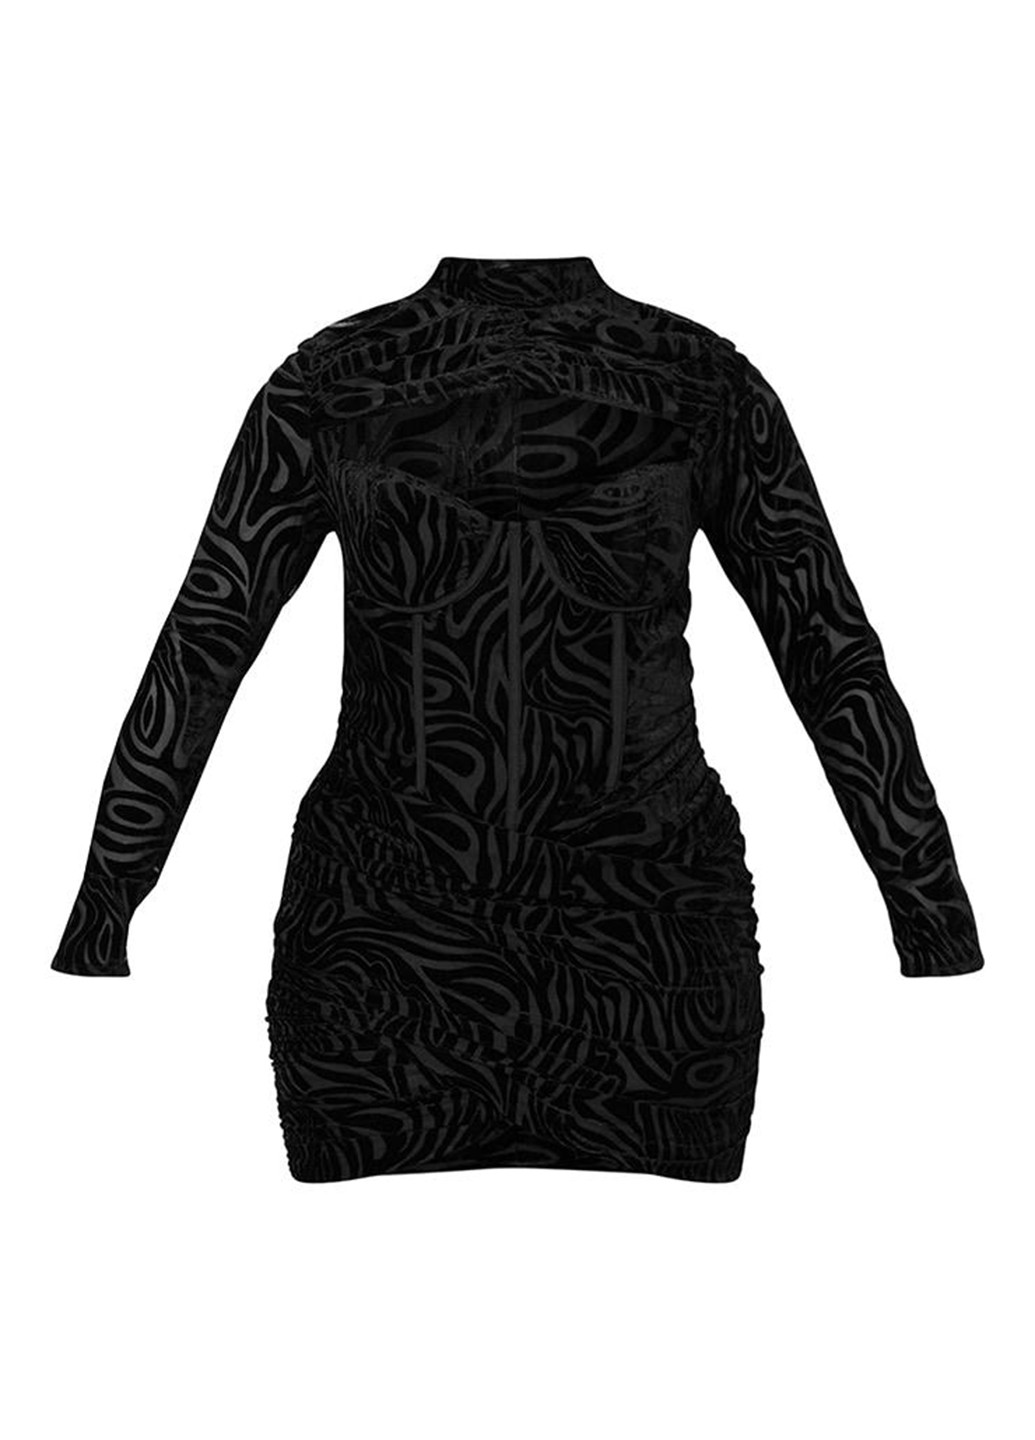 Черное коктейльное платье футляр PrettyLittleThing с рисунком